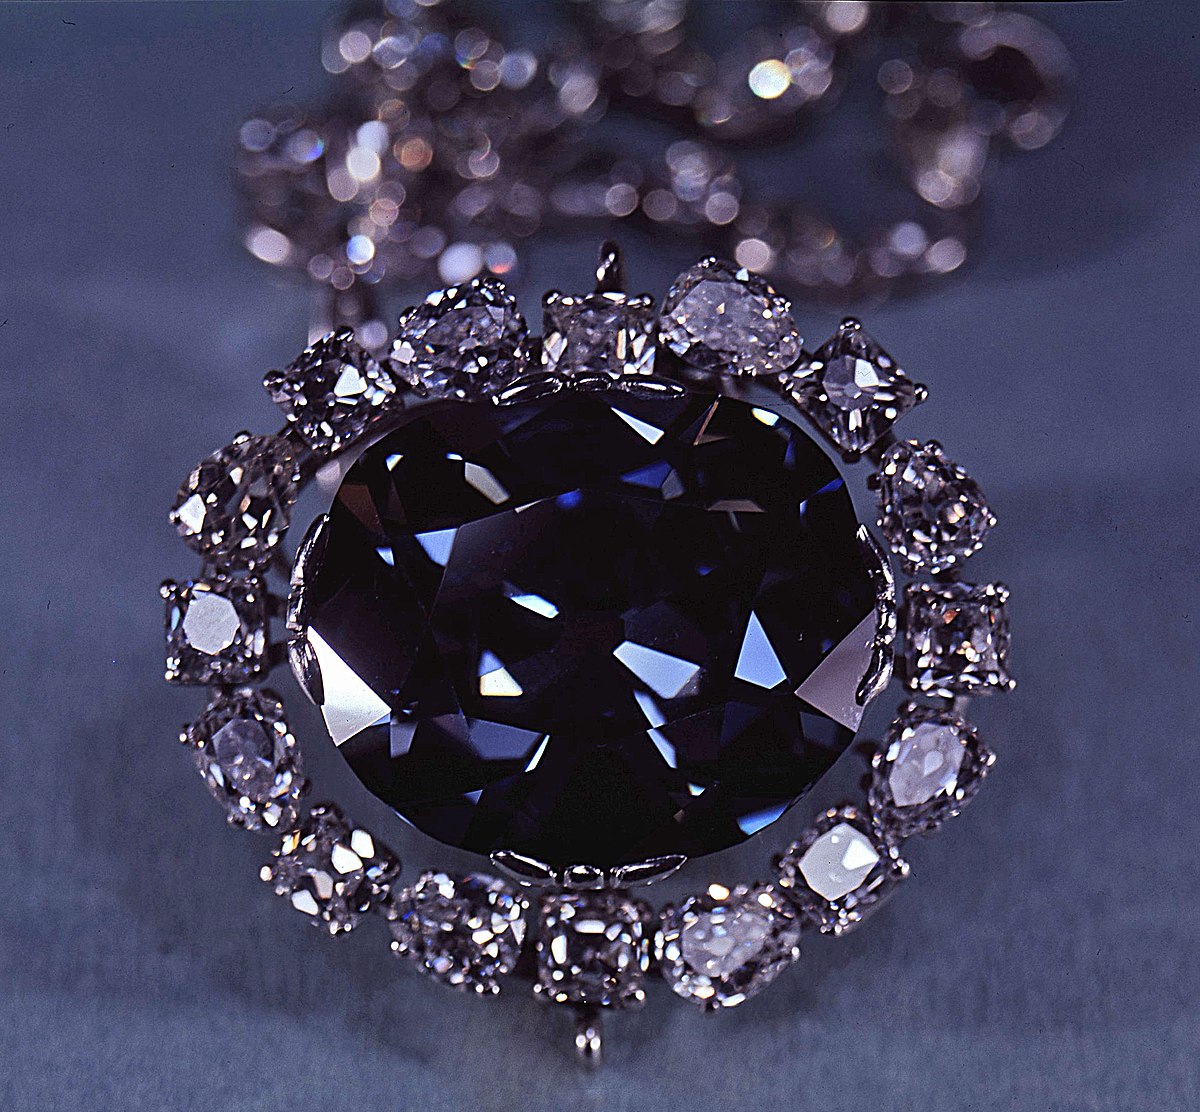 File:The Hope Diamond - SIA.jpg - Wikimedia Commons